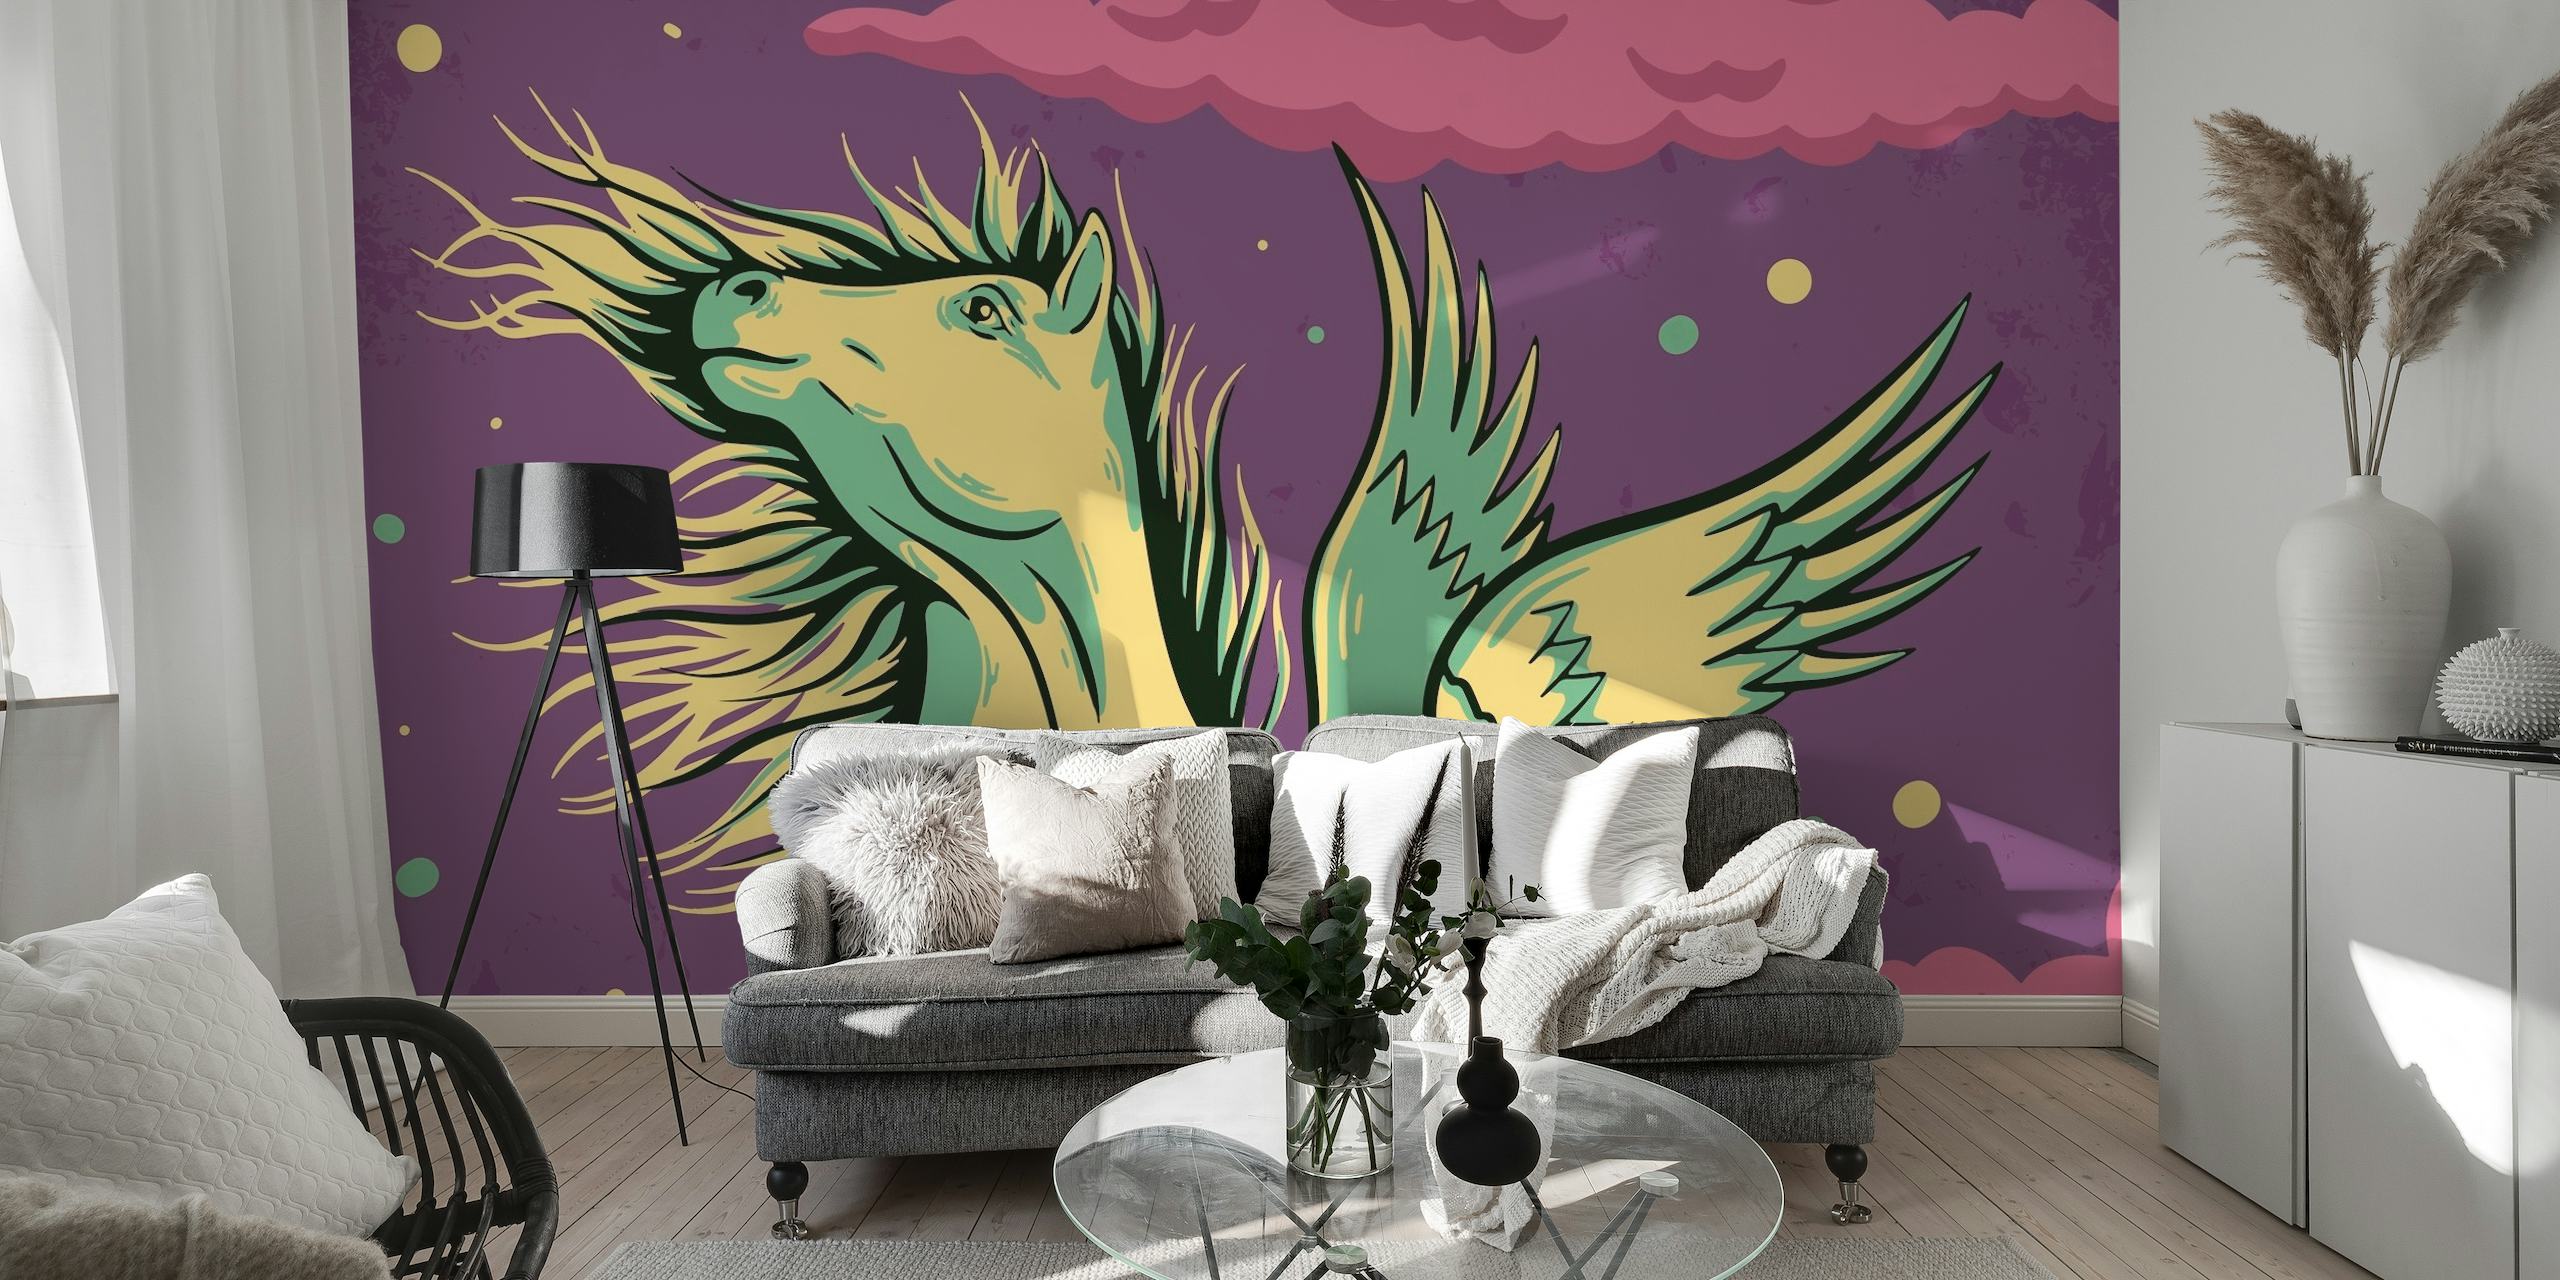 Pegasus fotobehang met mythisch paard in een paarse sterrenhemel